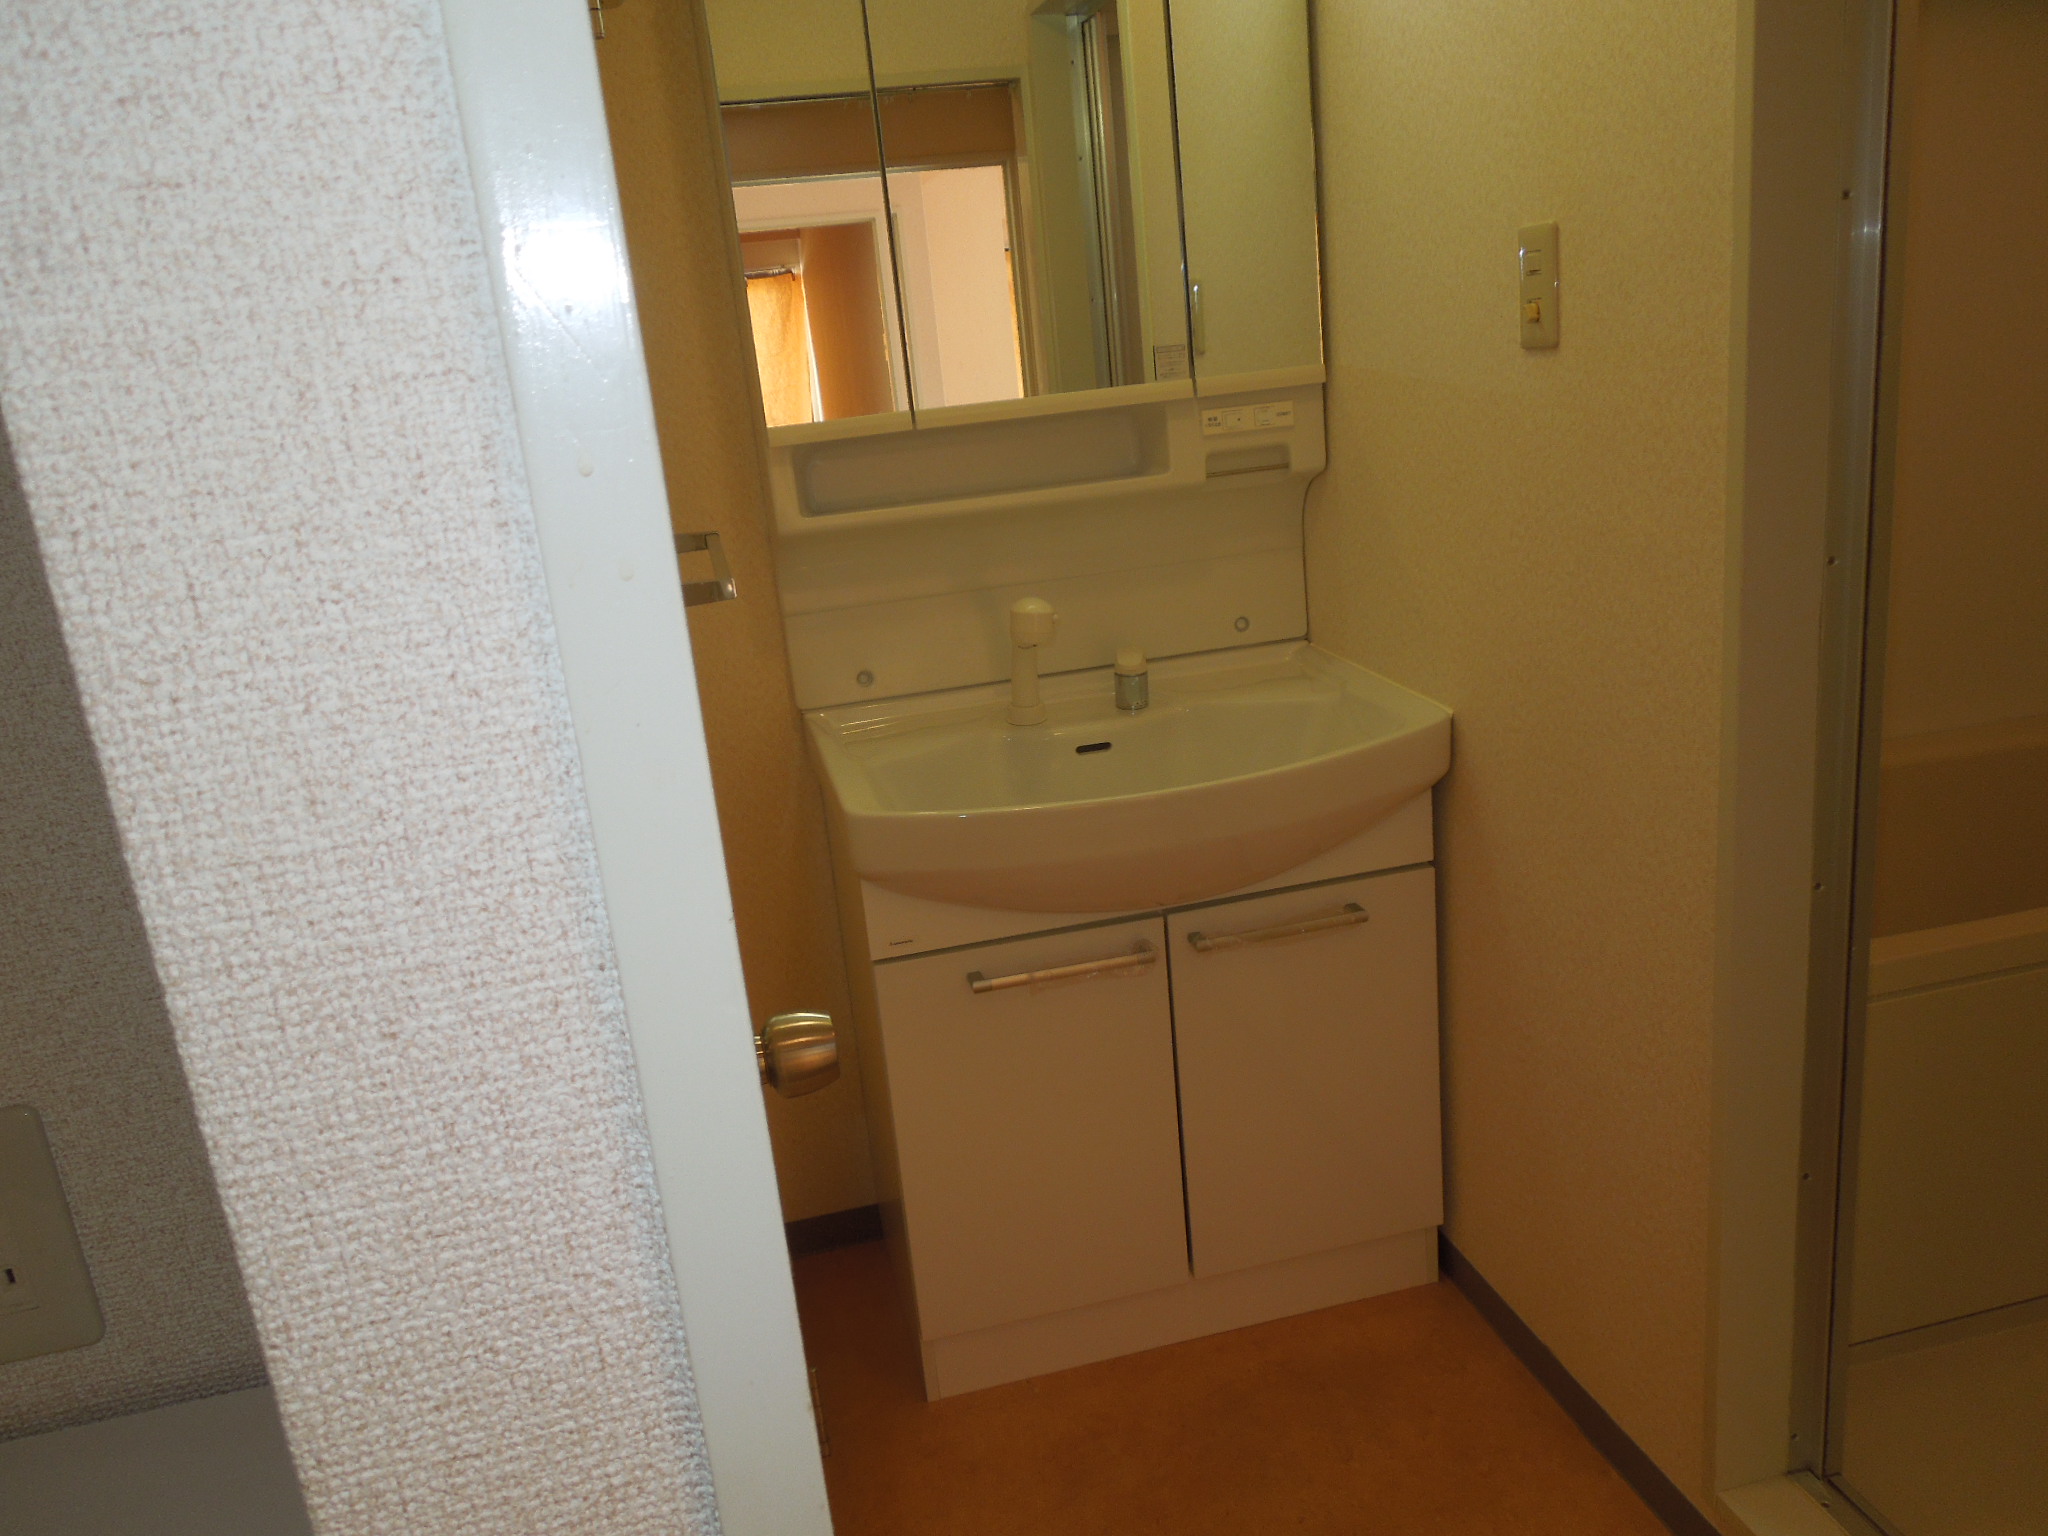 Washroom. 202, Room reference